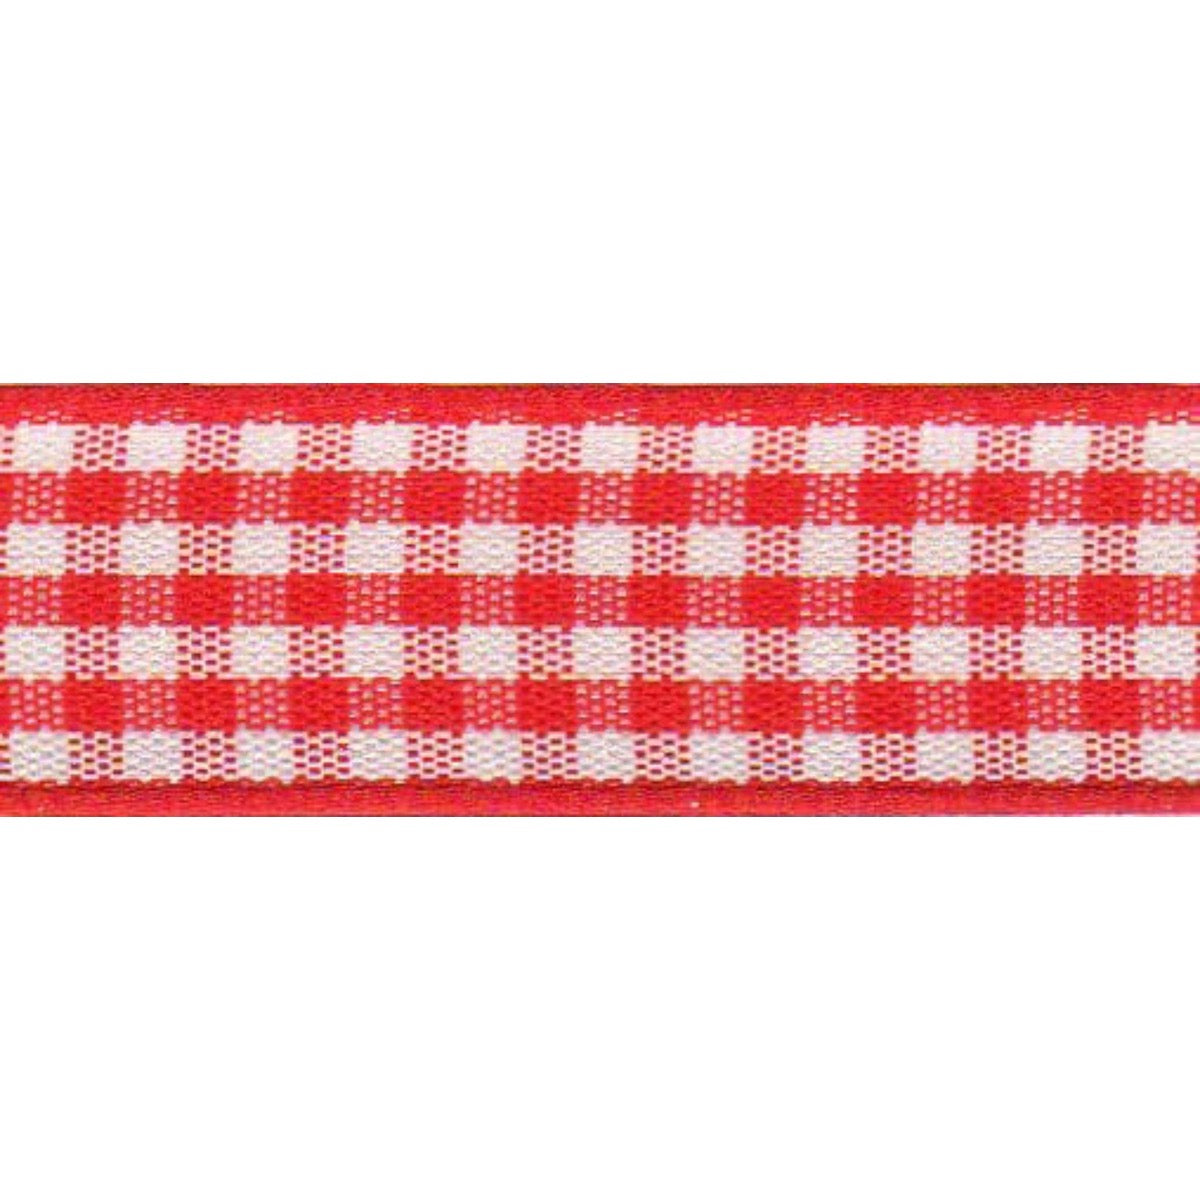 Gingham Ribbon: Red: 10mm wide. Price per metre.